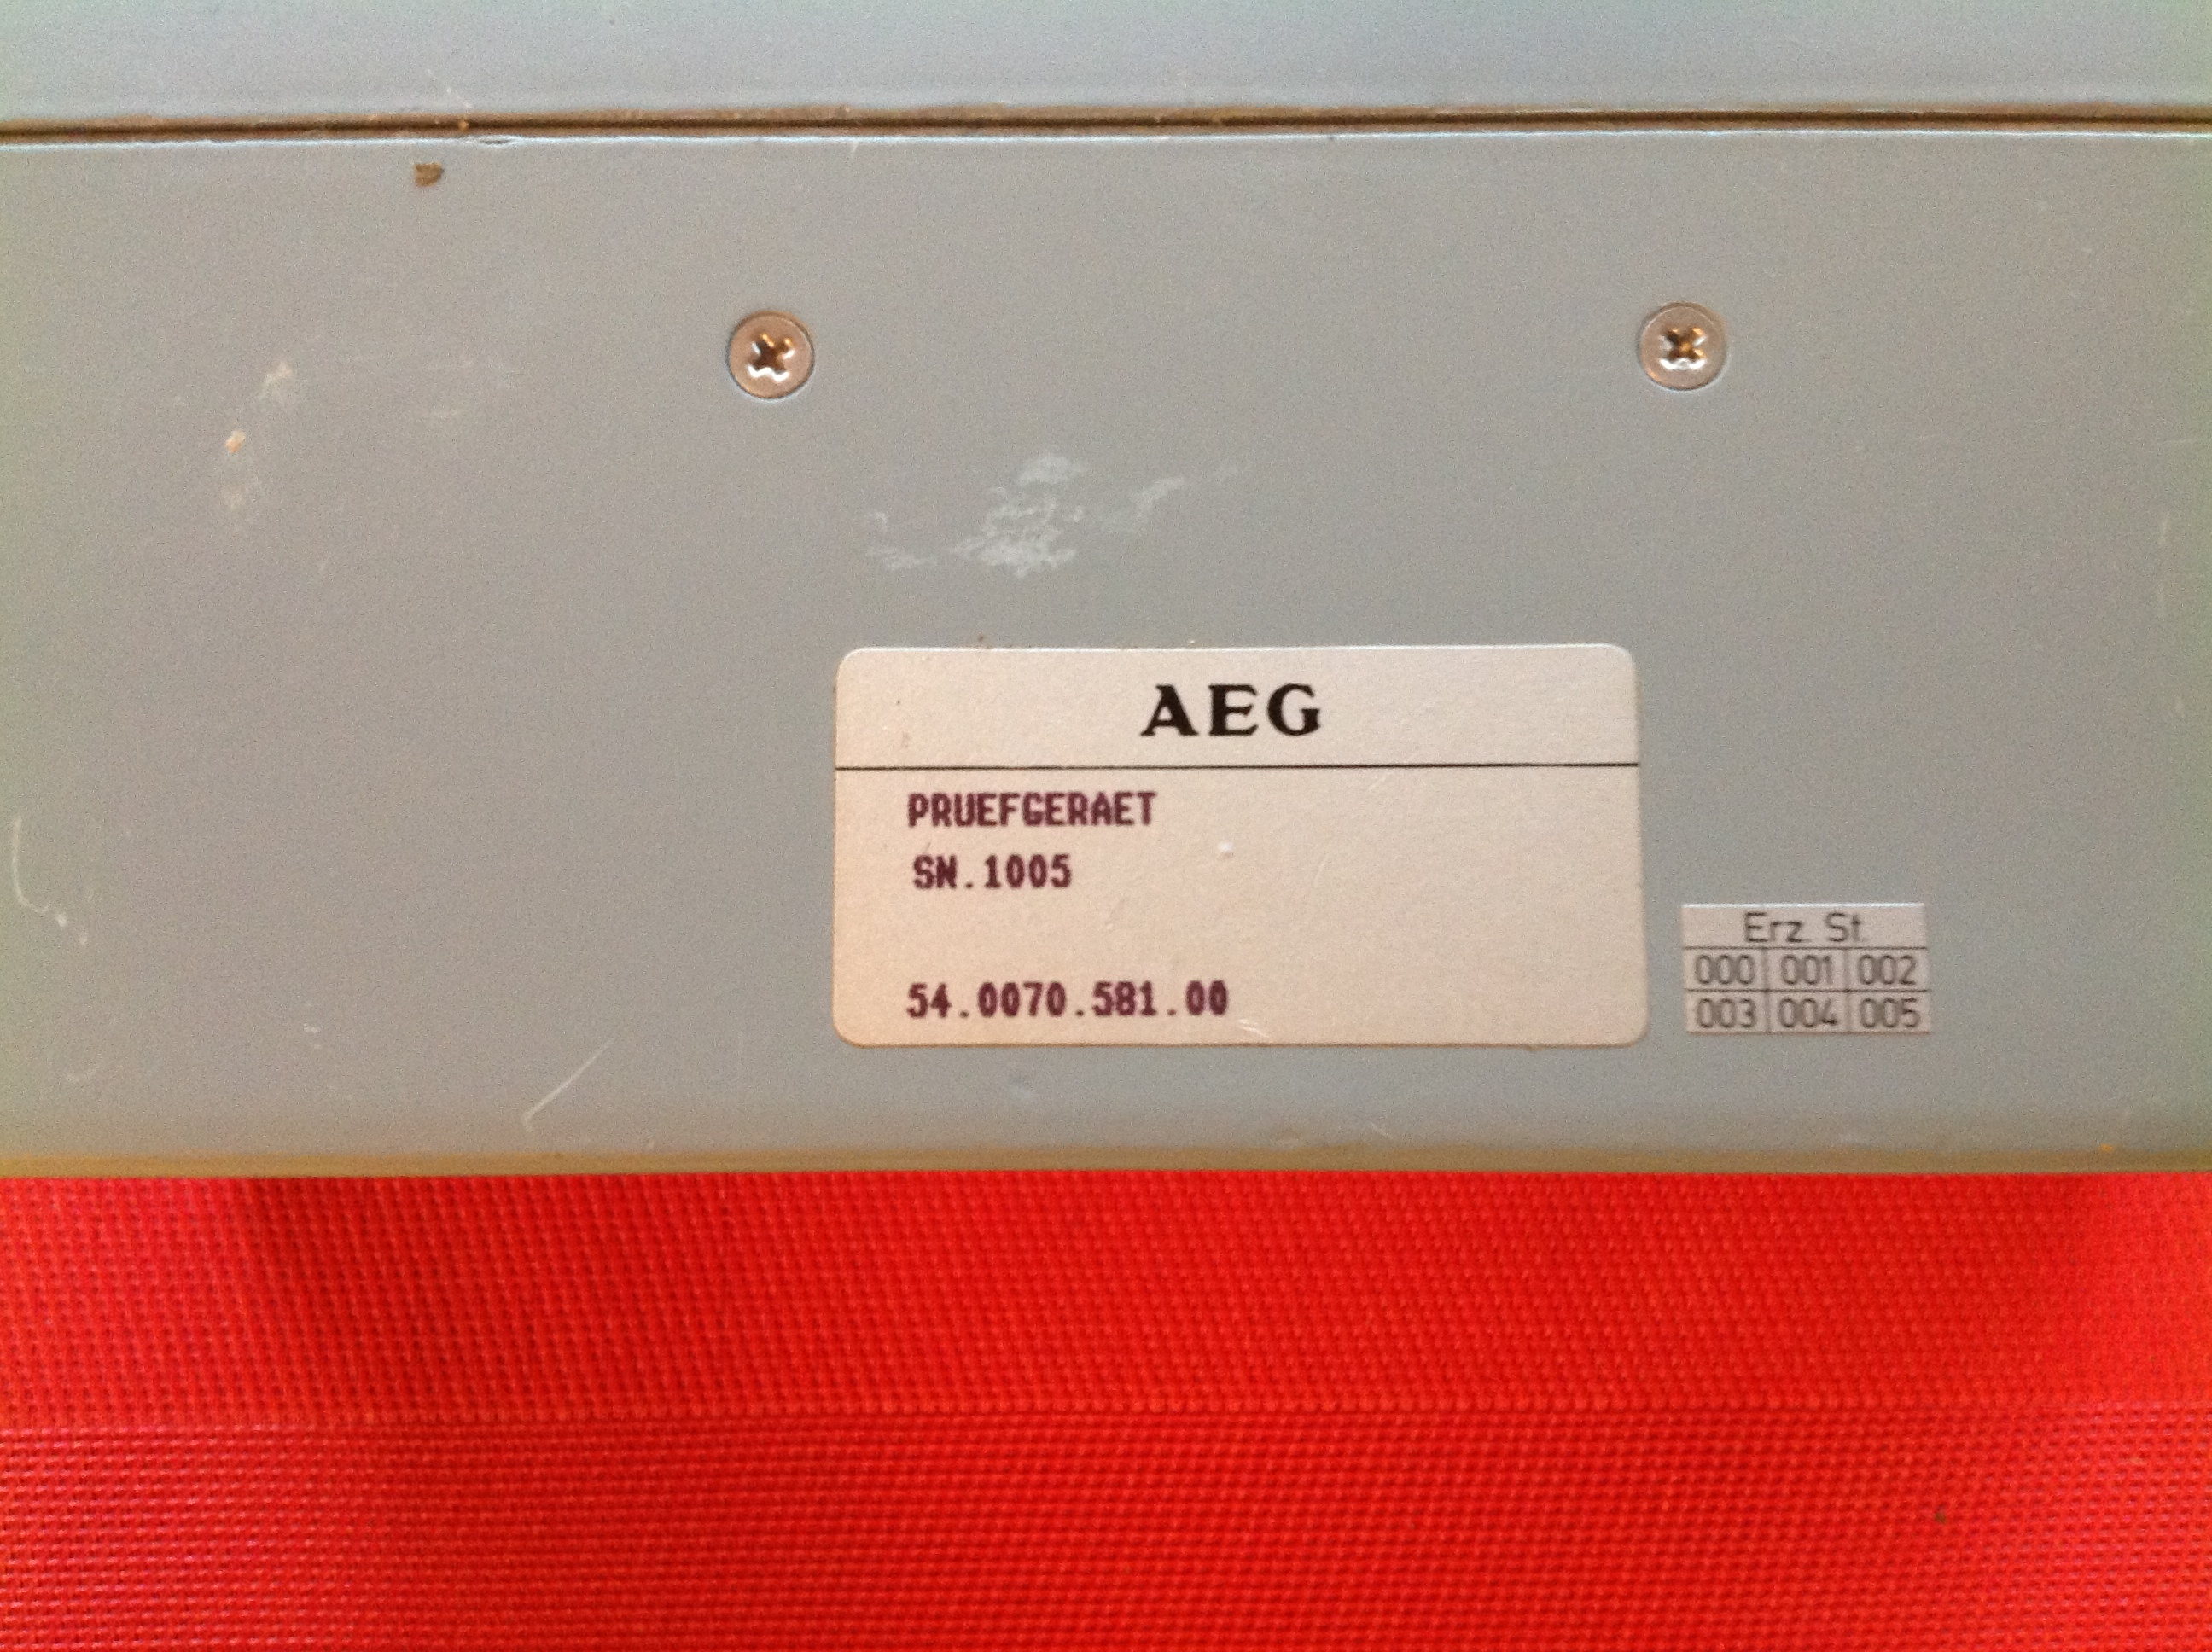 AEG-Prüfgerät